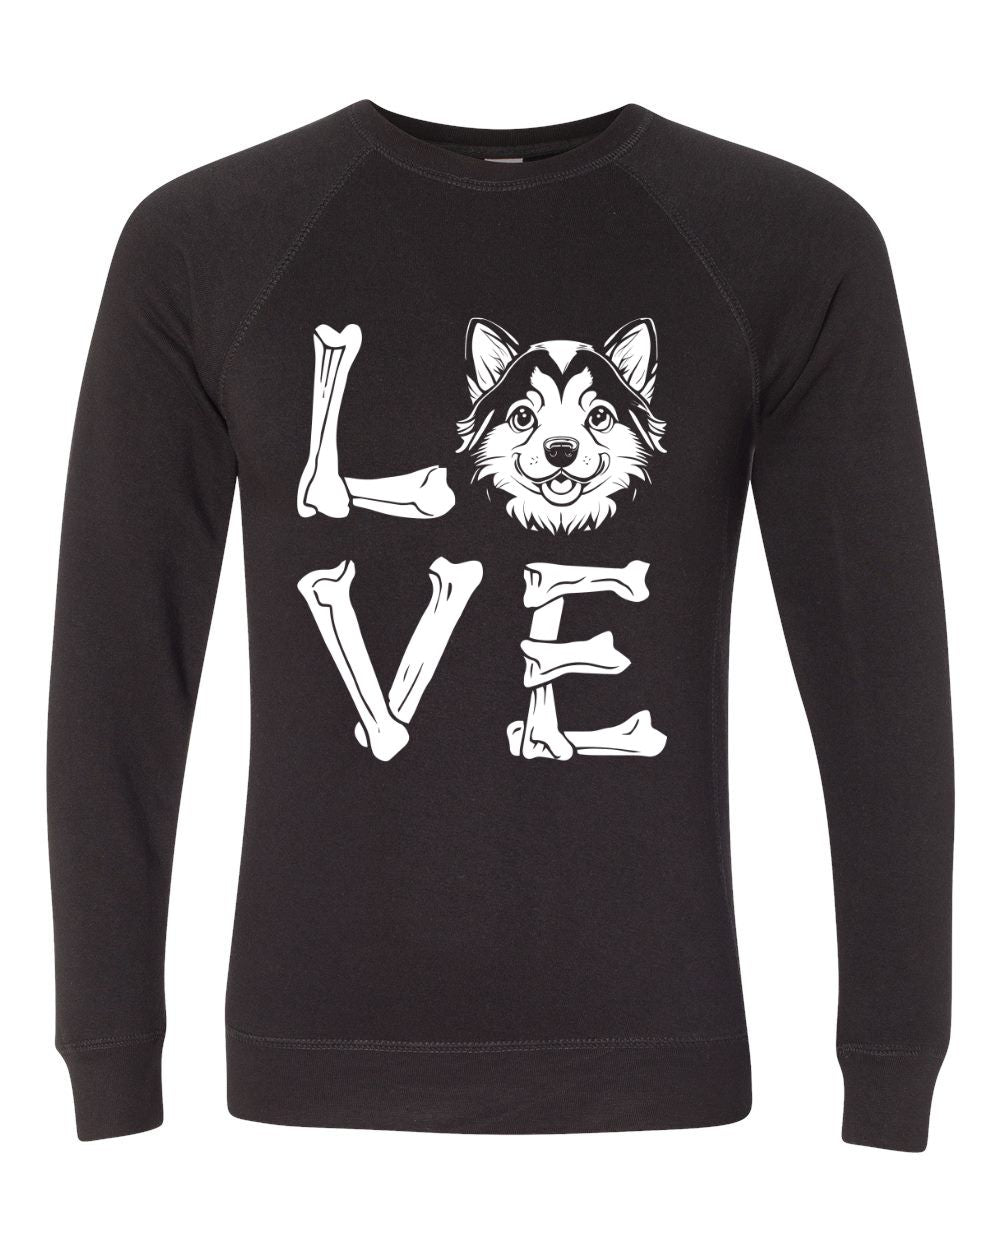 Love Siberian Husky Sweatshirt